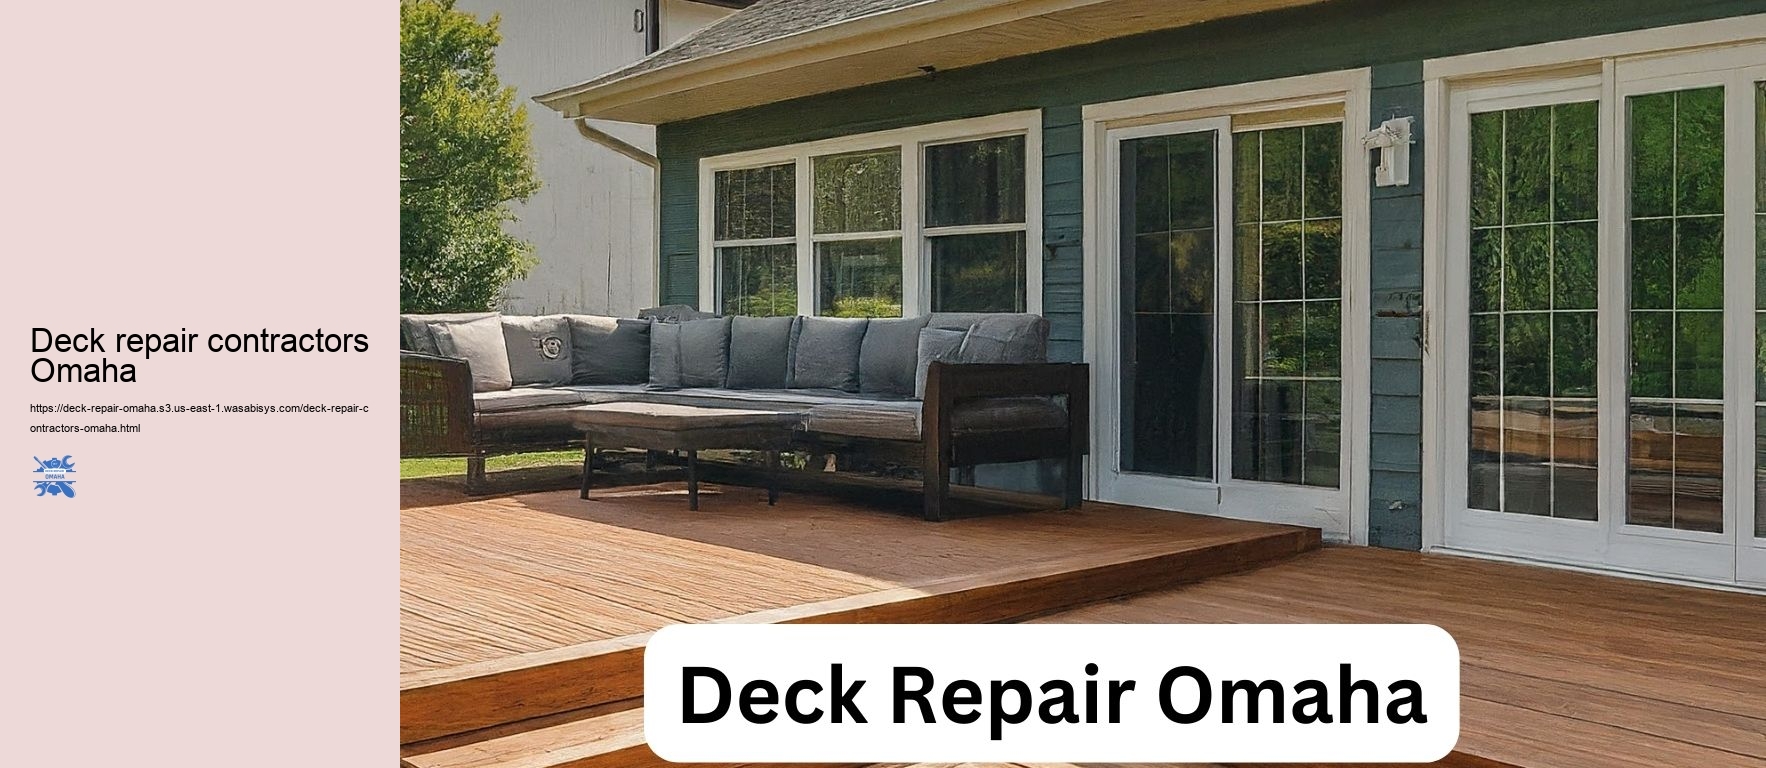 Deck repair contractors Omaha